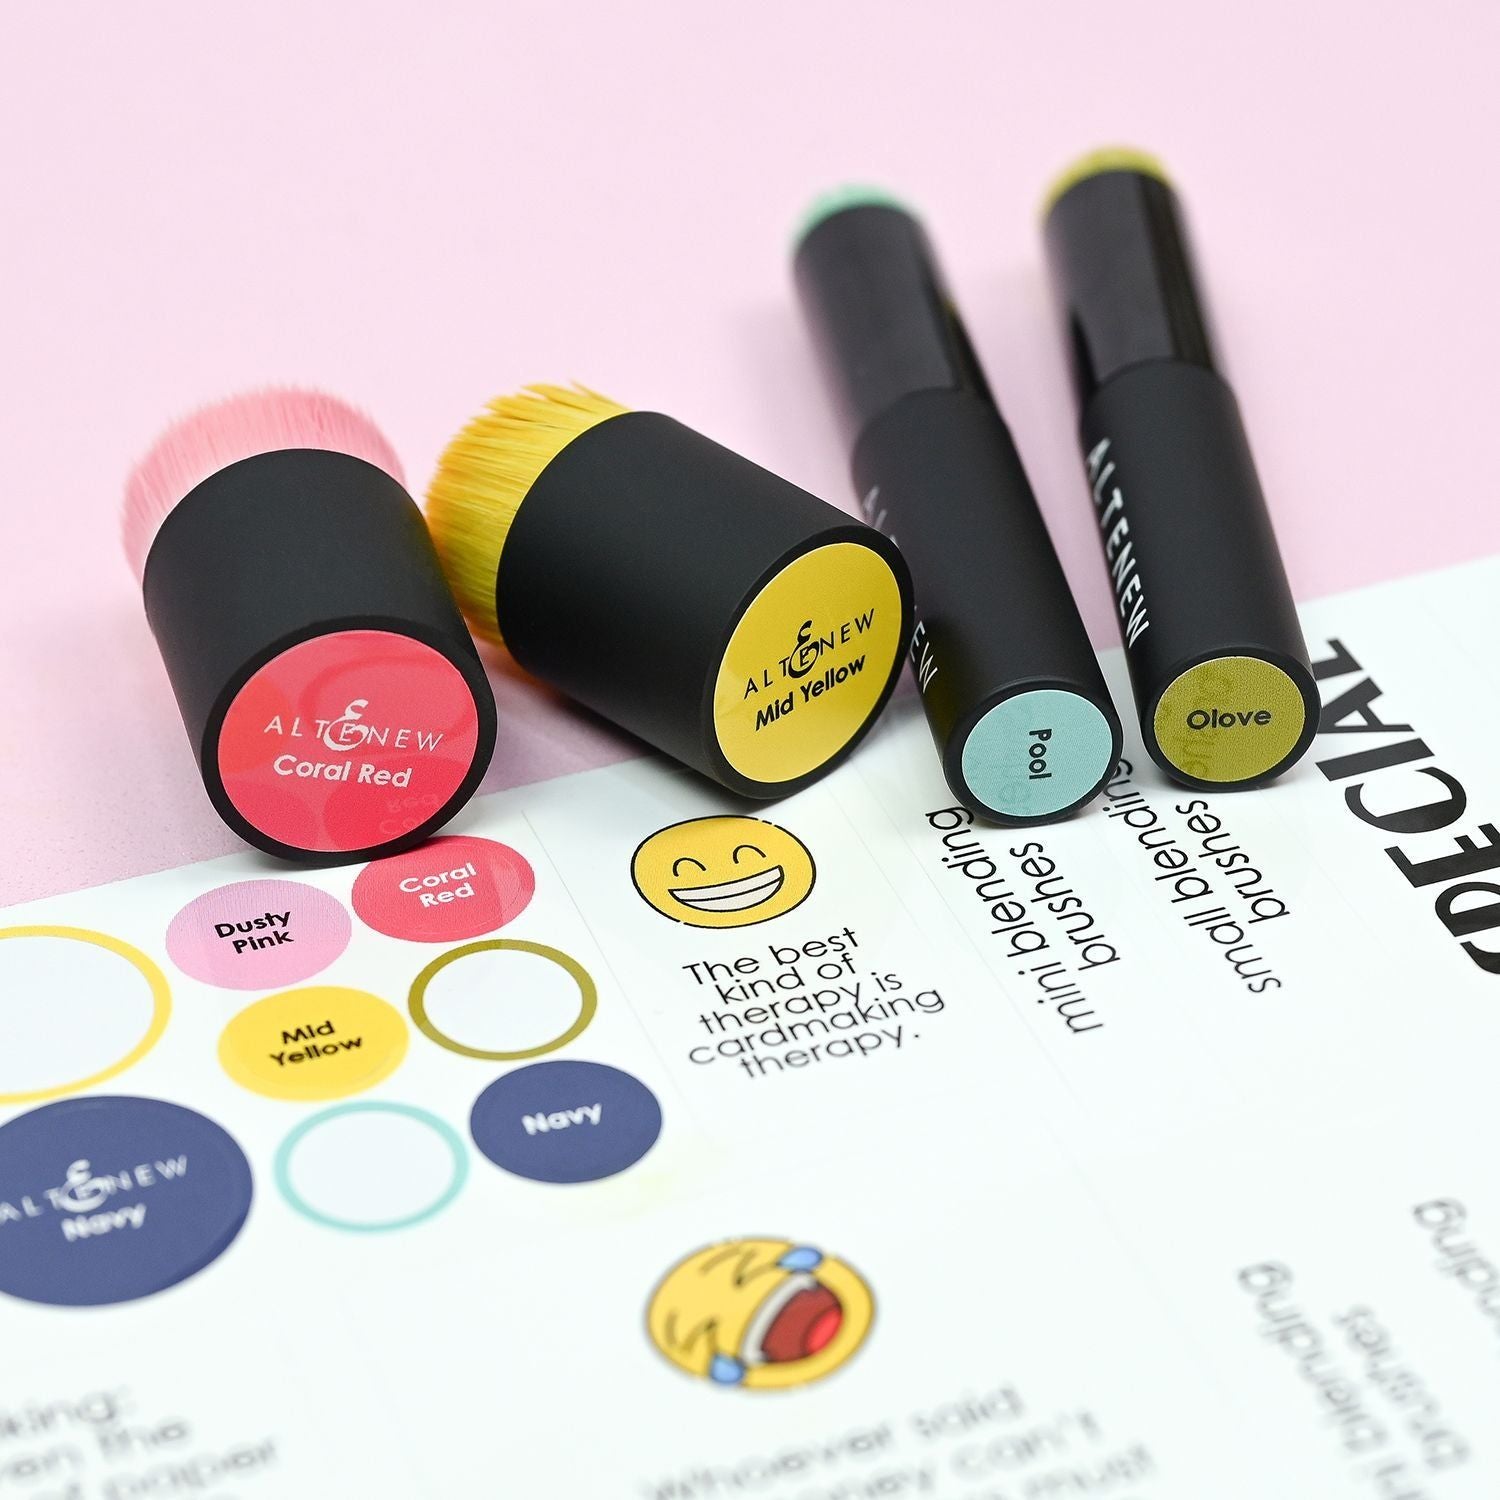 Altenew Small Ink Blending Brush Label Set - All Crisp Dye Ink Colors (4 Sheets)